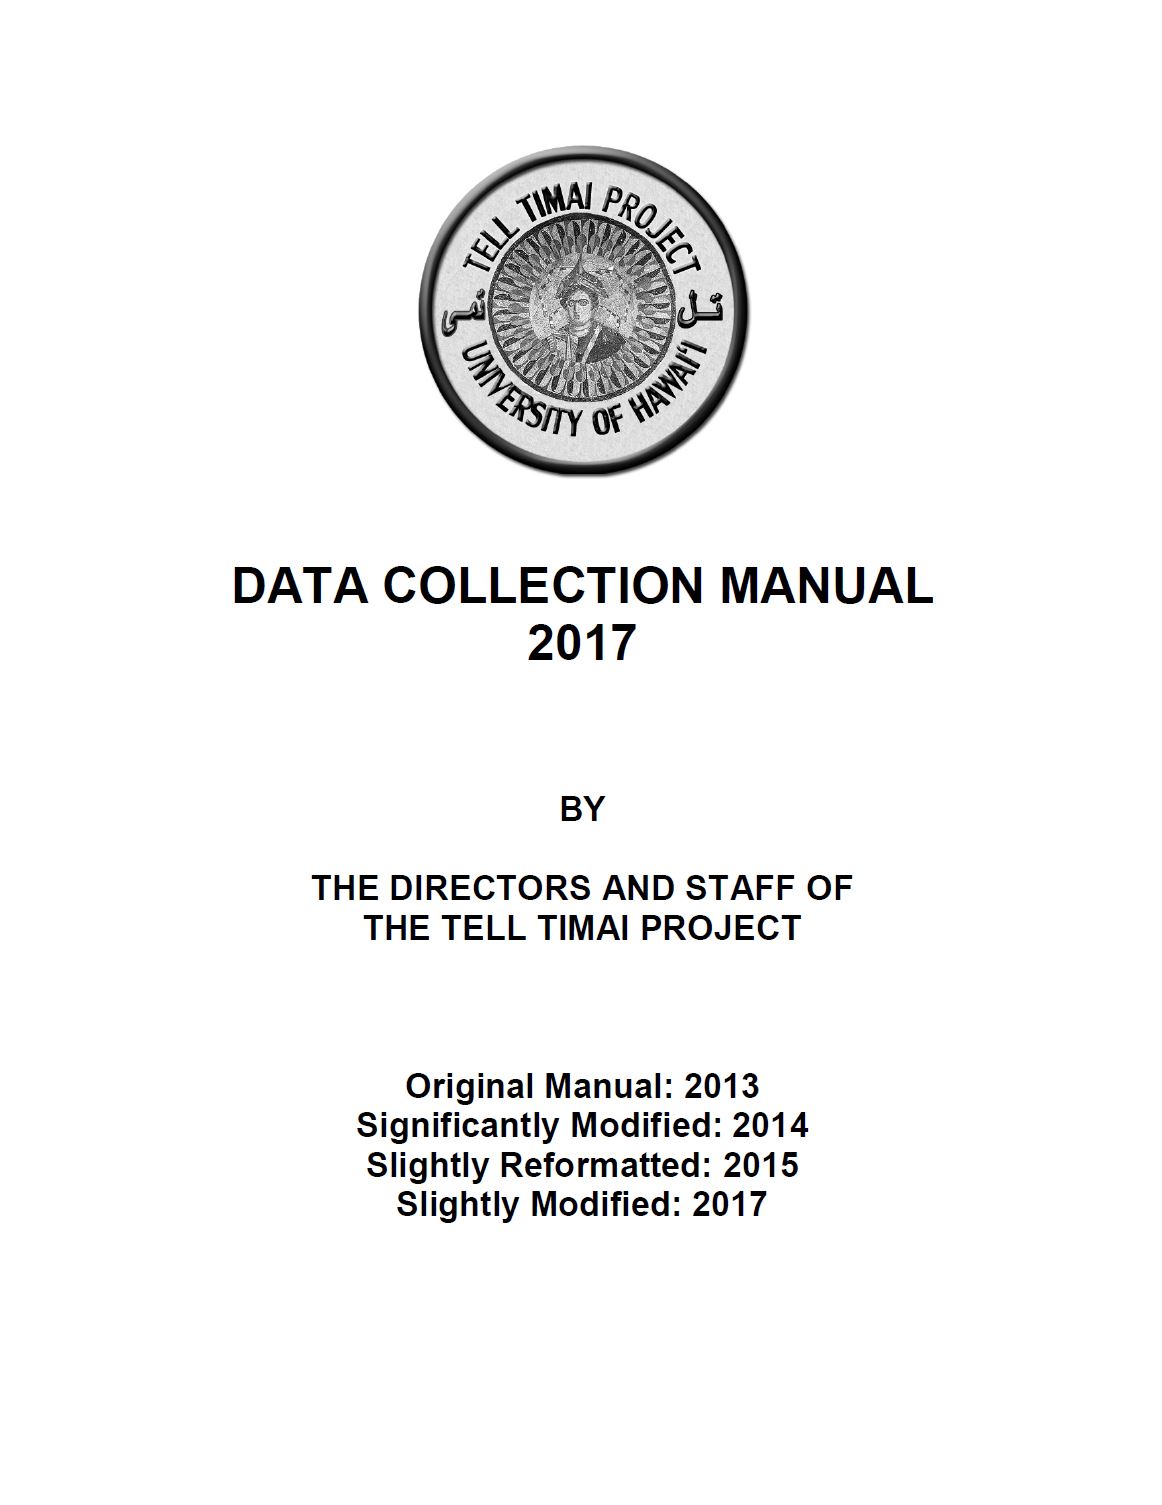 Field Manual - A4 Format